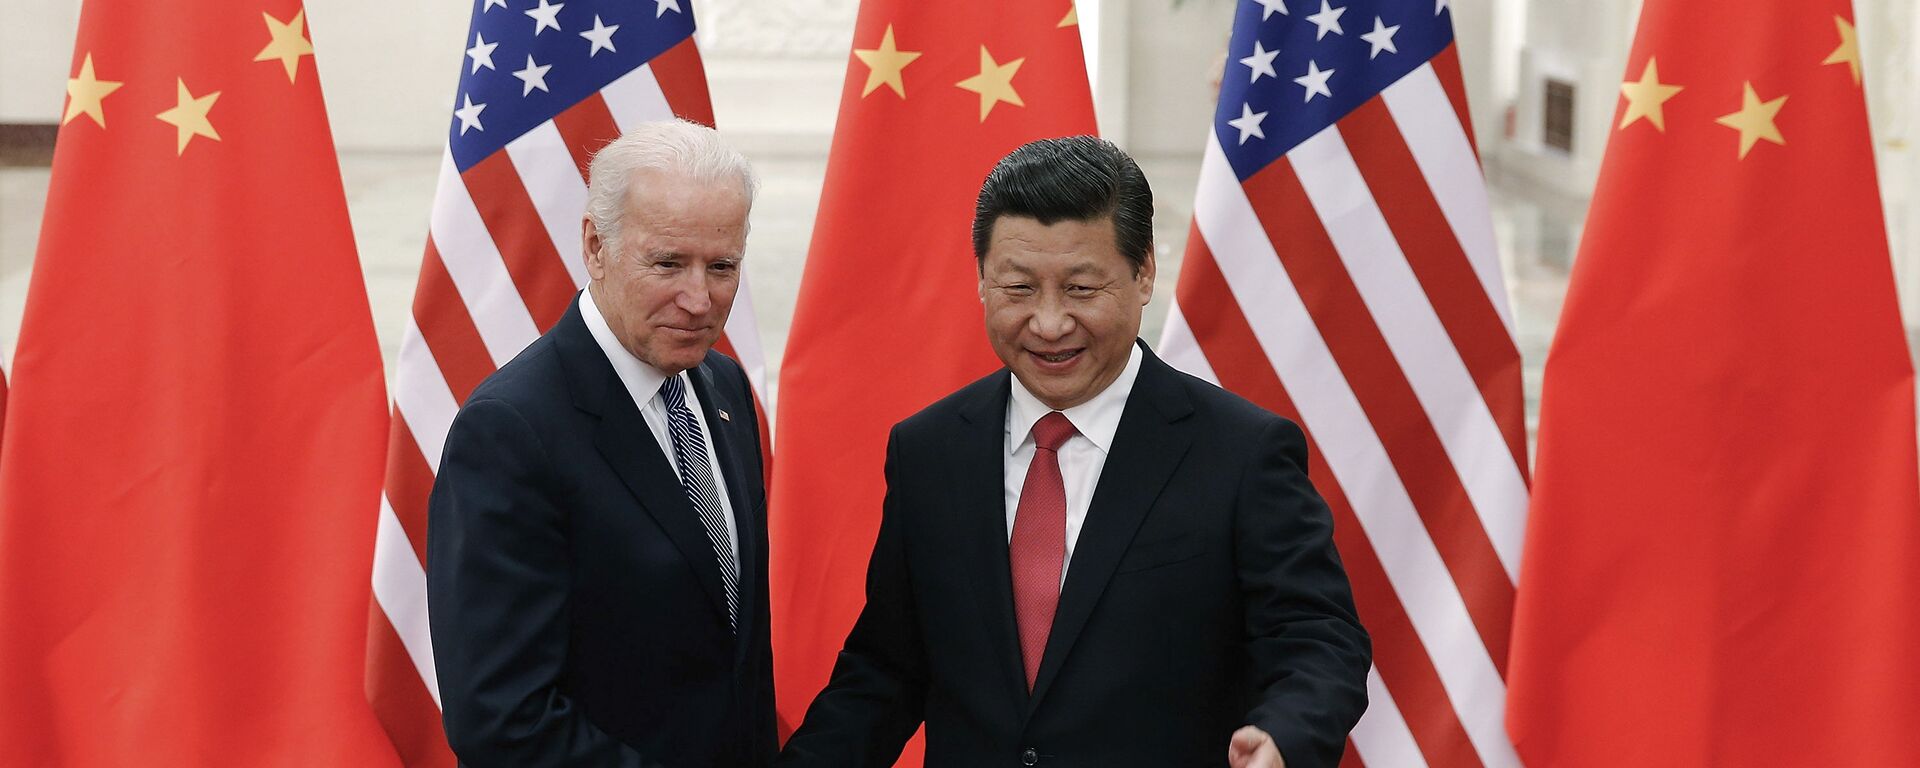 Joe Biden et Xi Jinping. - Sputnik Afrique, 1920, 11.02.2021